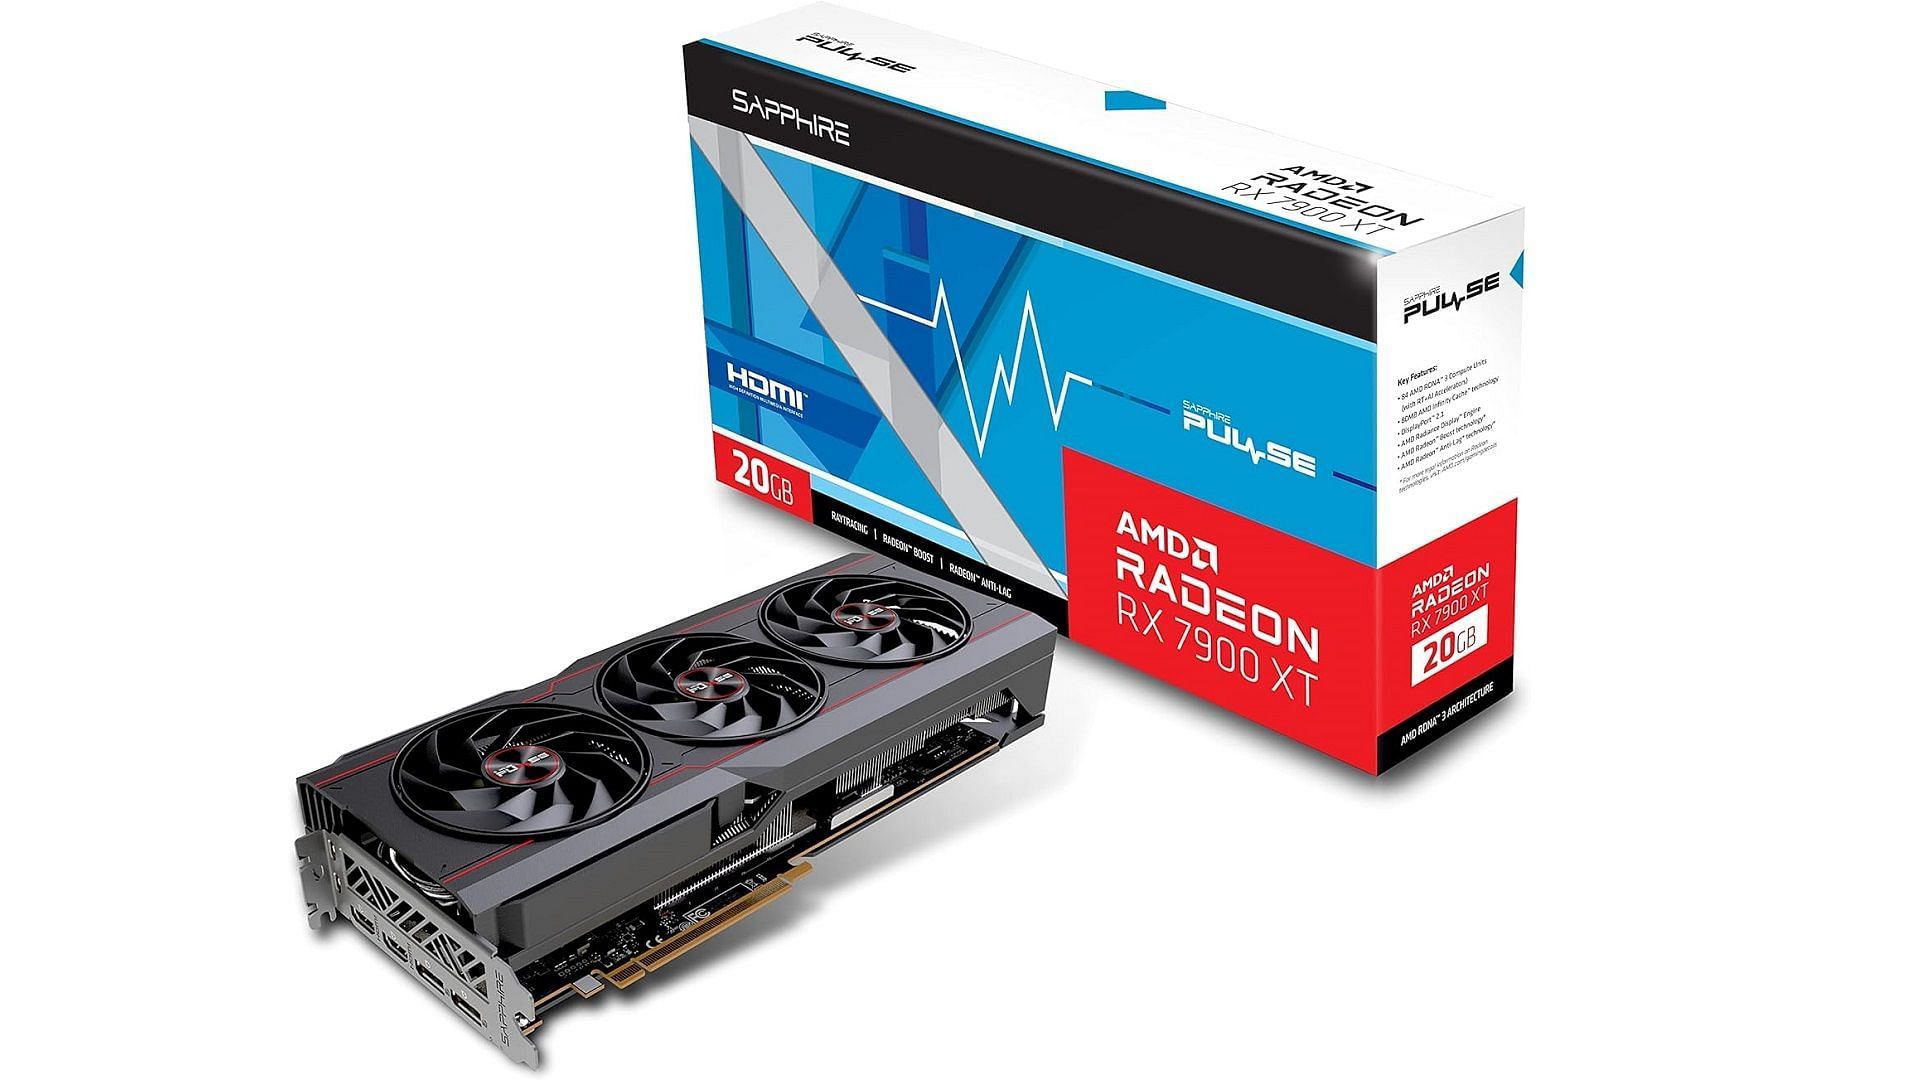 Sapphire Pulse AMD Radeon RX 7900 XT Gaming GPU (Image via Sapphire/Amazon)